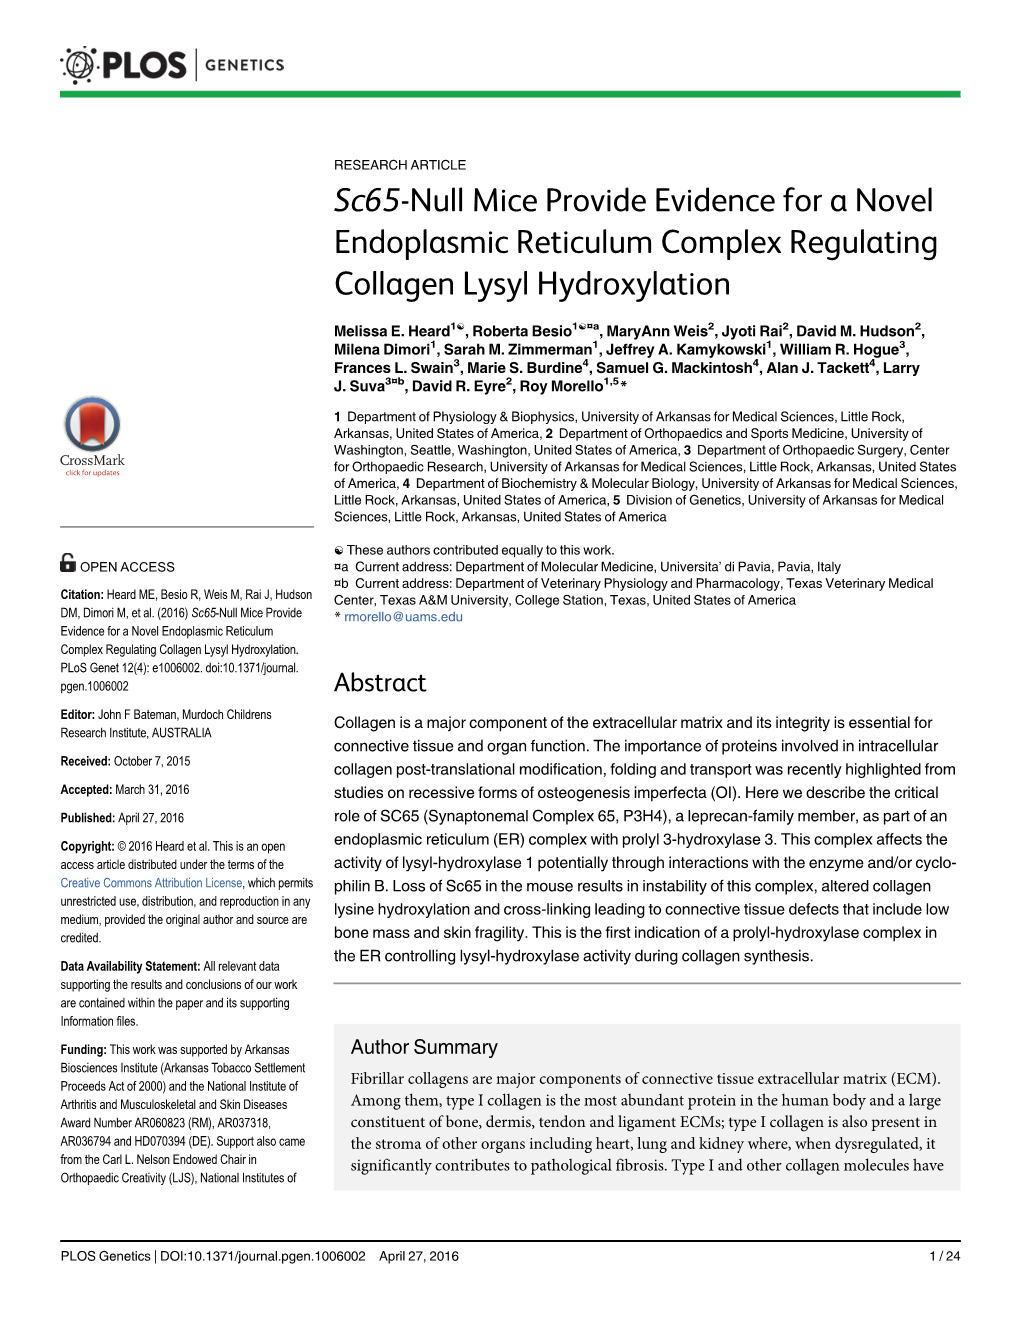 Sc65-Null Mice Provide Evidence for a Novel Endoplasmic Reticulum Complex Regulating Collagen Lysyl Hydroxylation